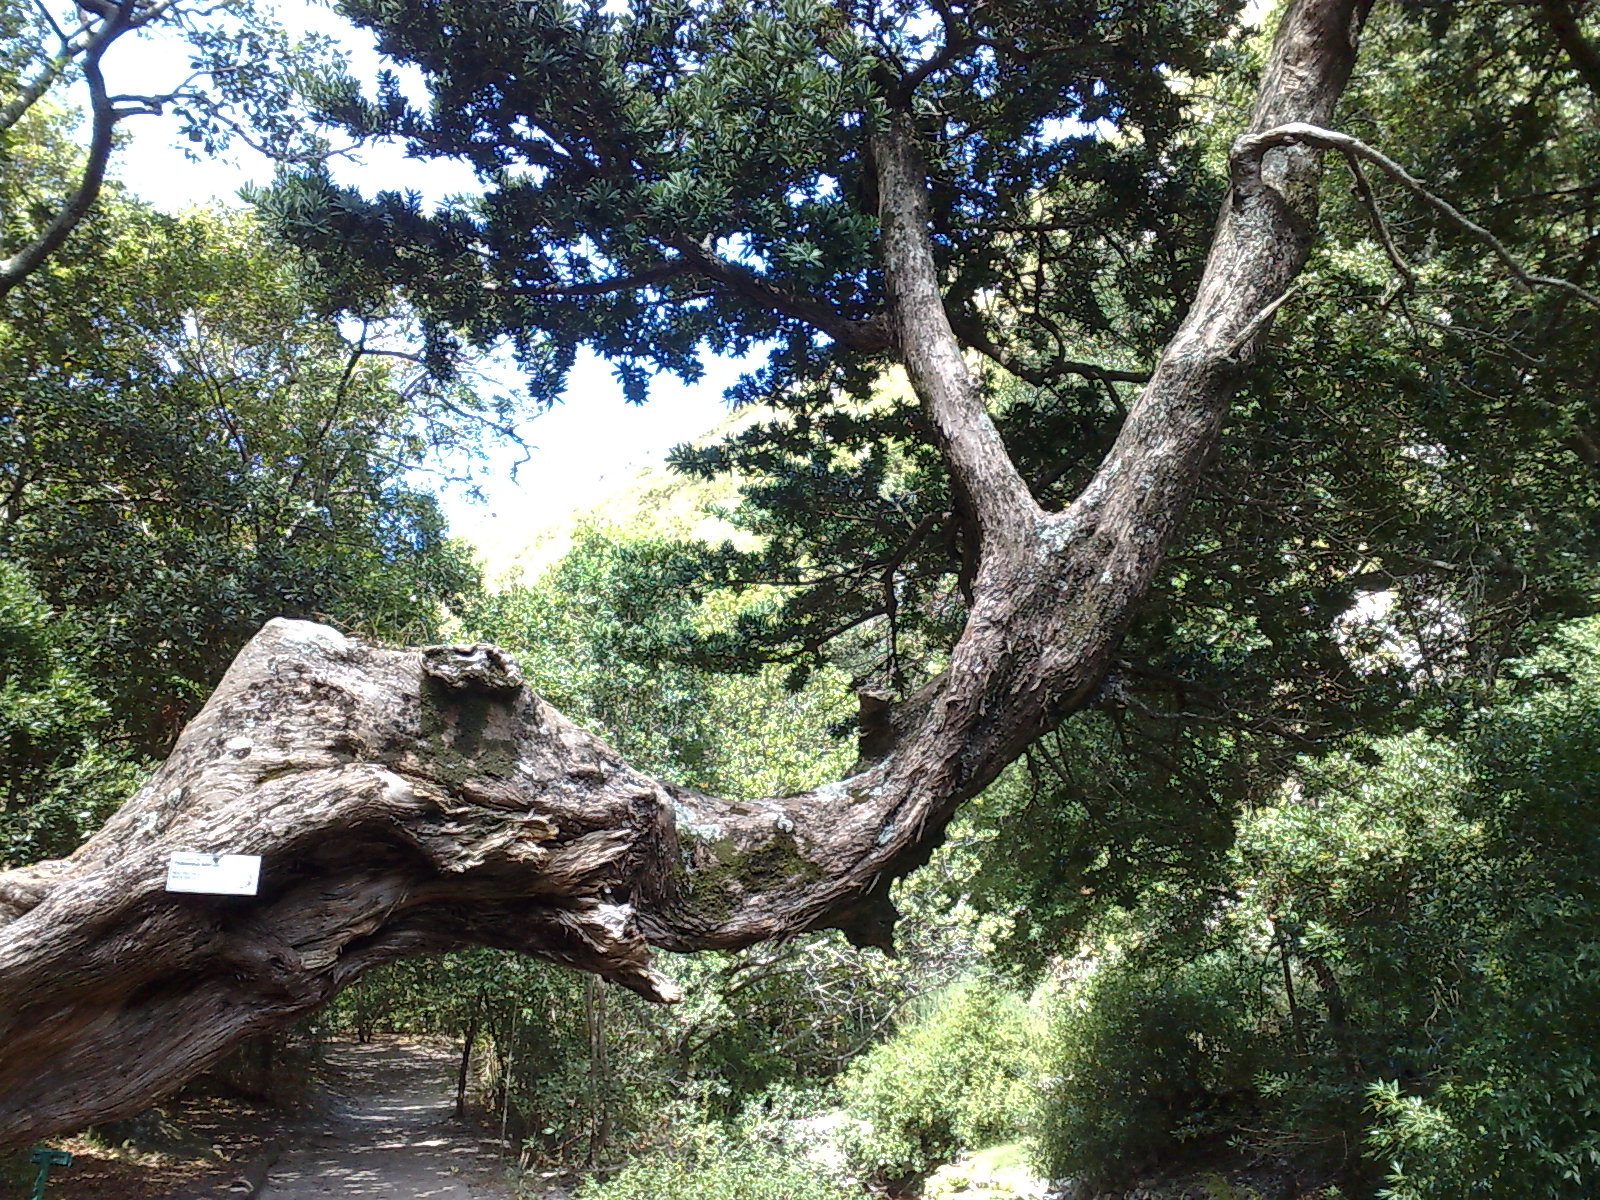 Yellowwood Tree